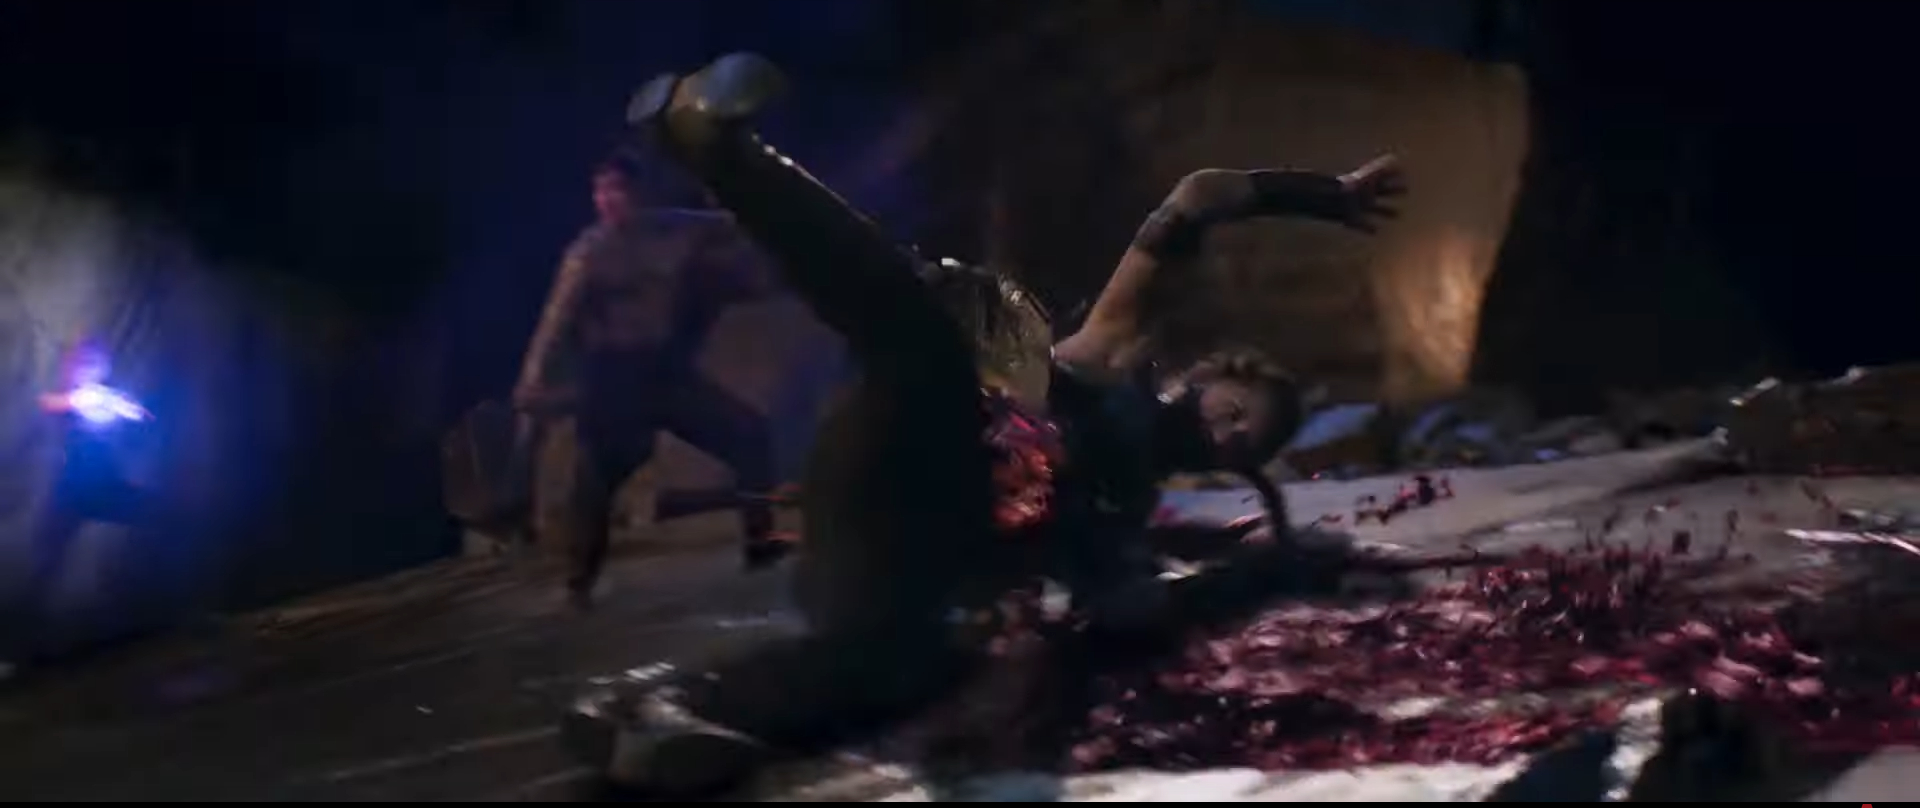 Mortal Kombat trailer screenshot: Sonya and Cole make a bloody mess of another Kombatant